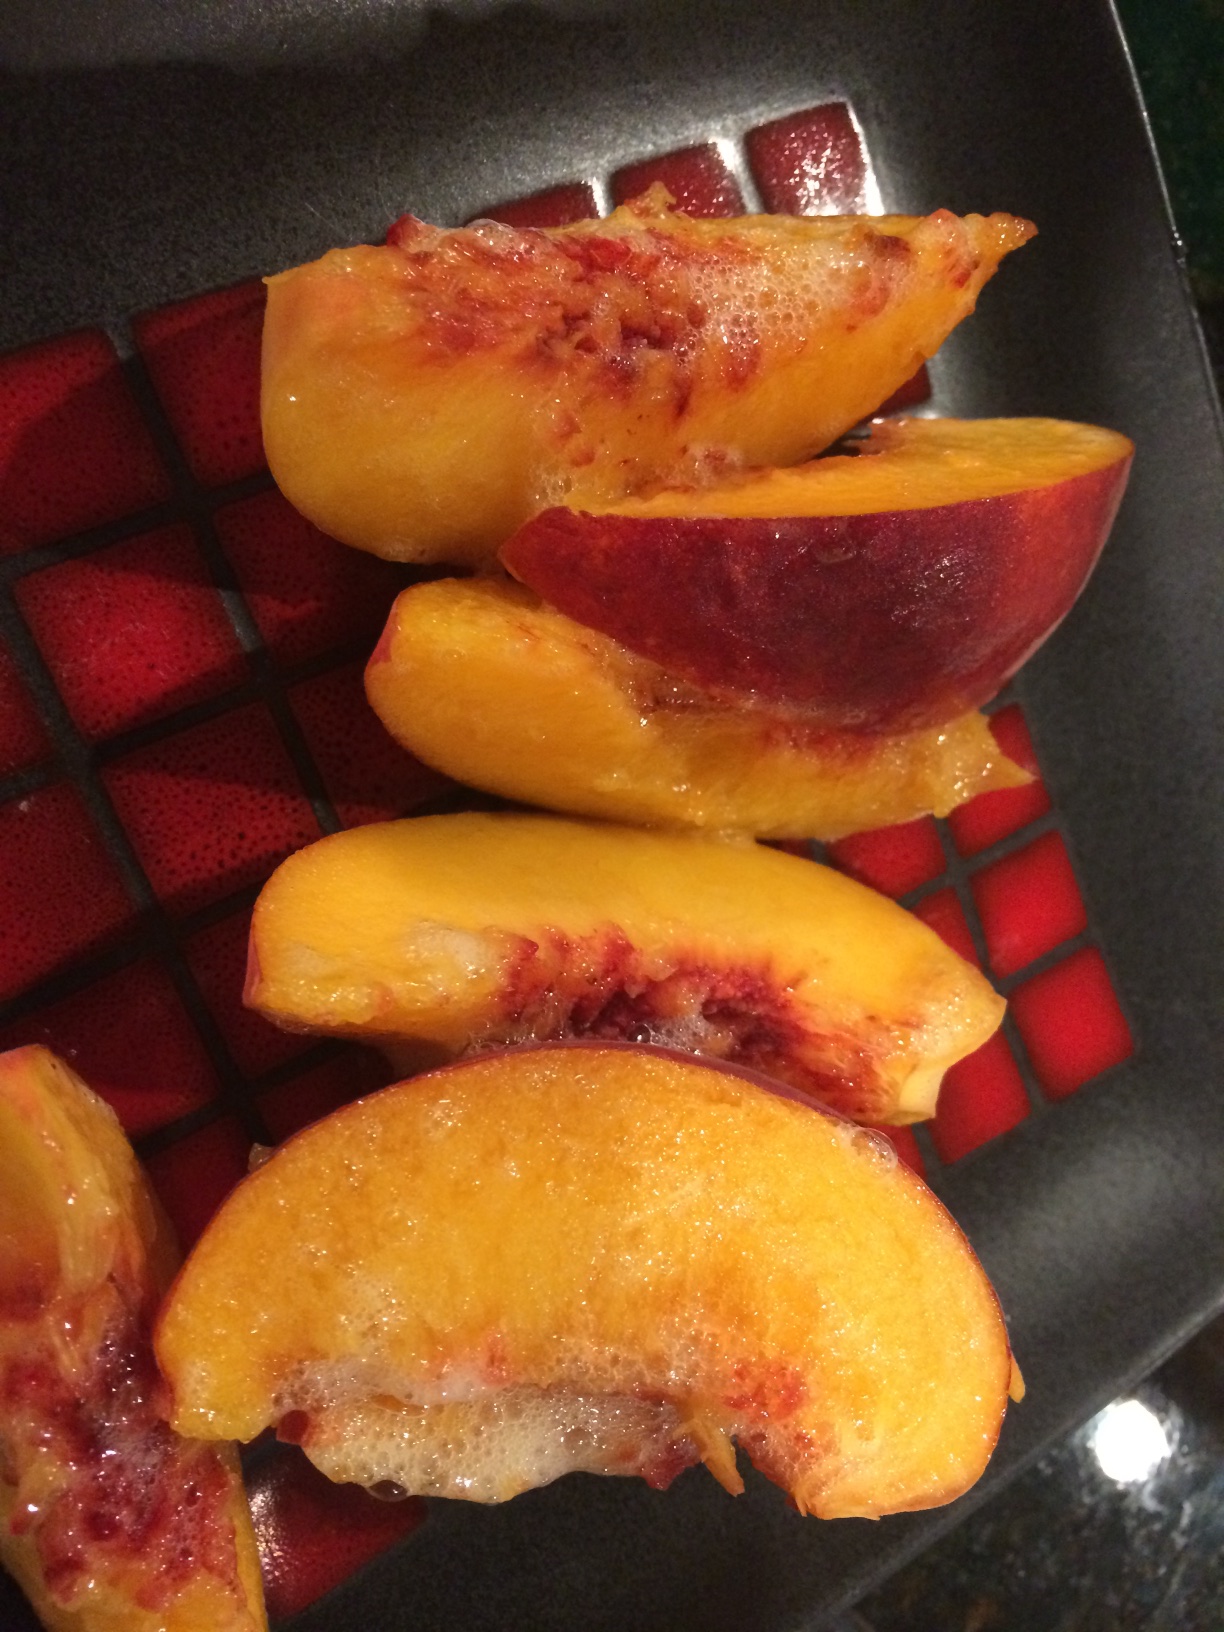  Fizzy peaches are especially good! 